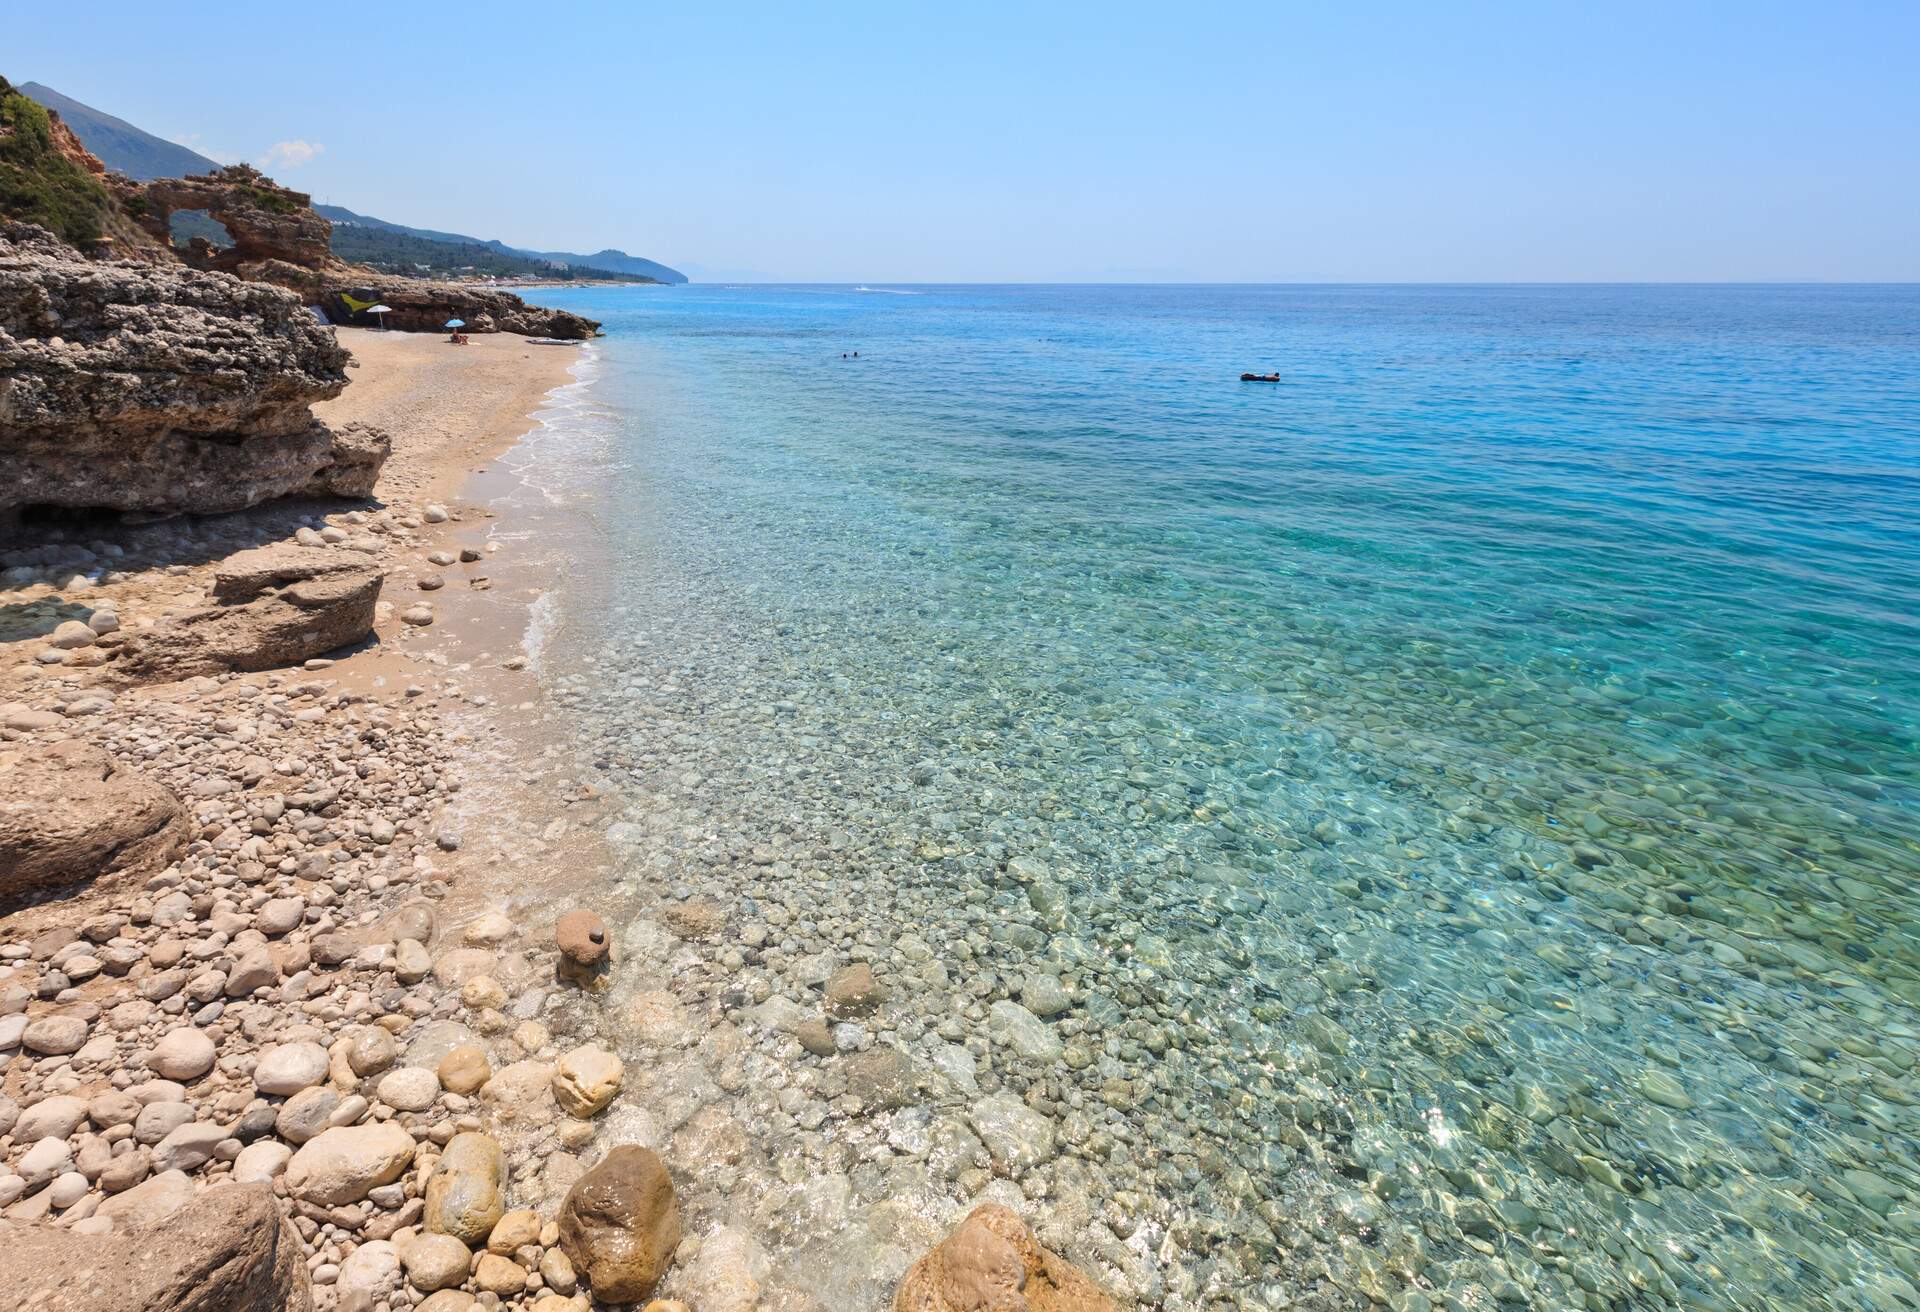 Drymades beach, Albania. Summer  Ionian sea coast view. People are unrecognizable.